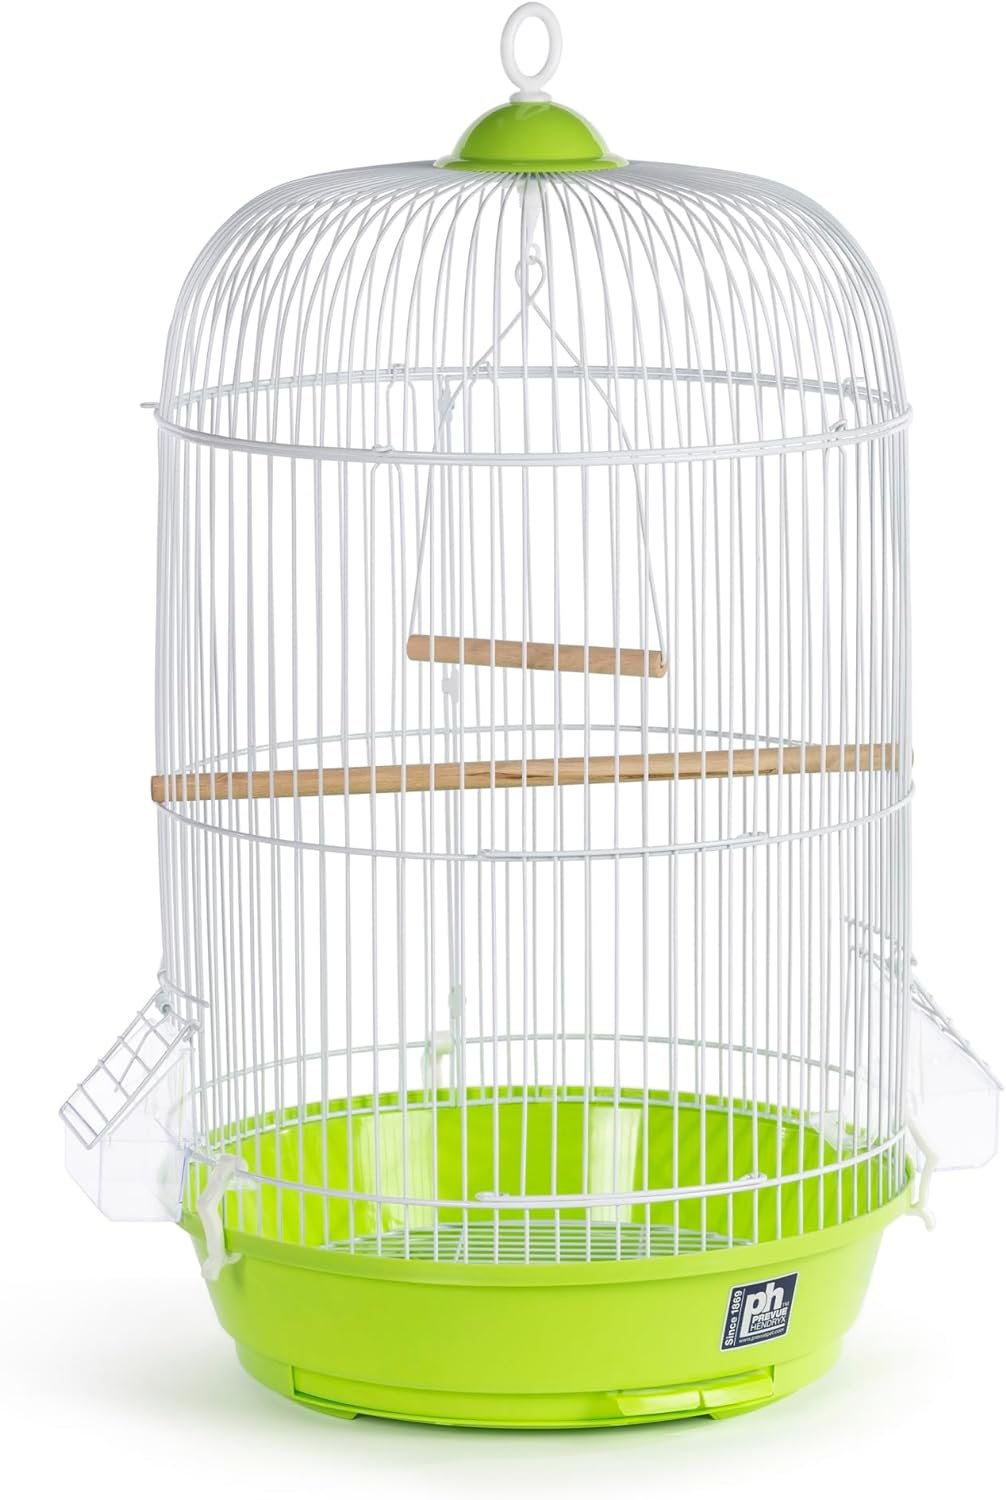 Prevue Hendryx SP31999G Classic Round Bird Cage, Green,1/2